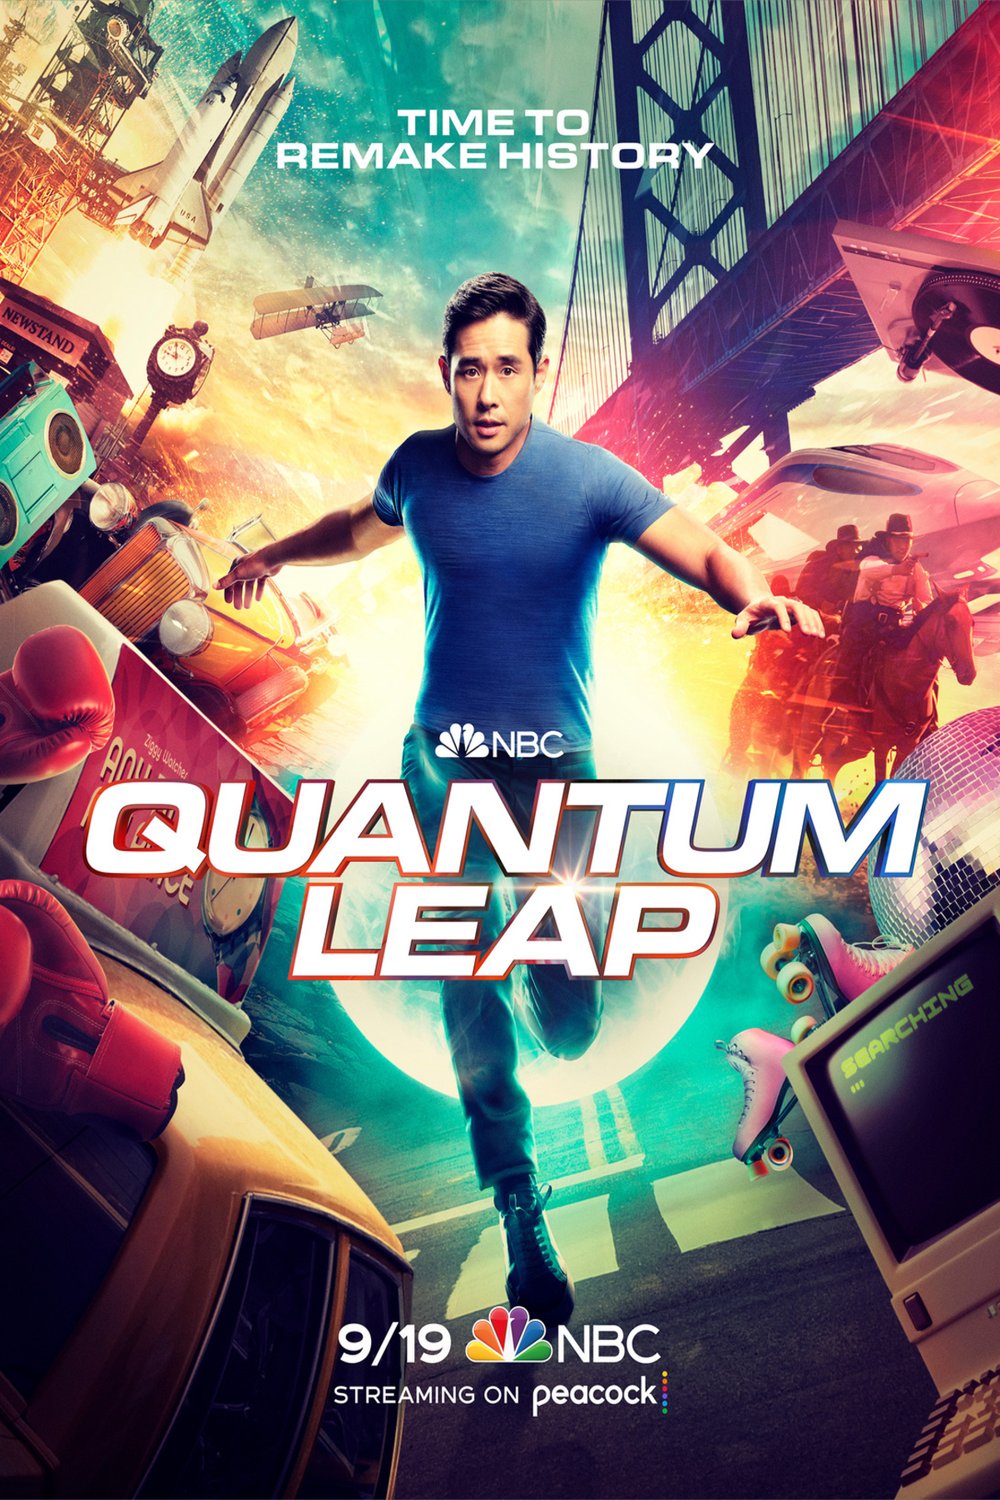 Poster of the movie Quantum Leap